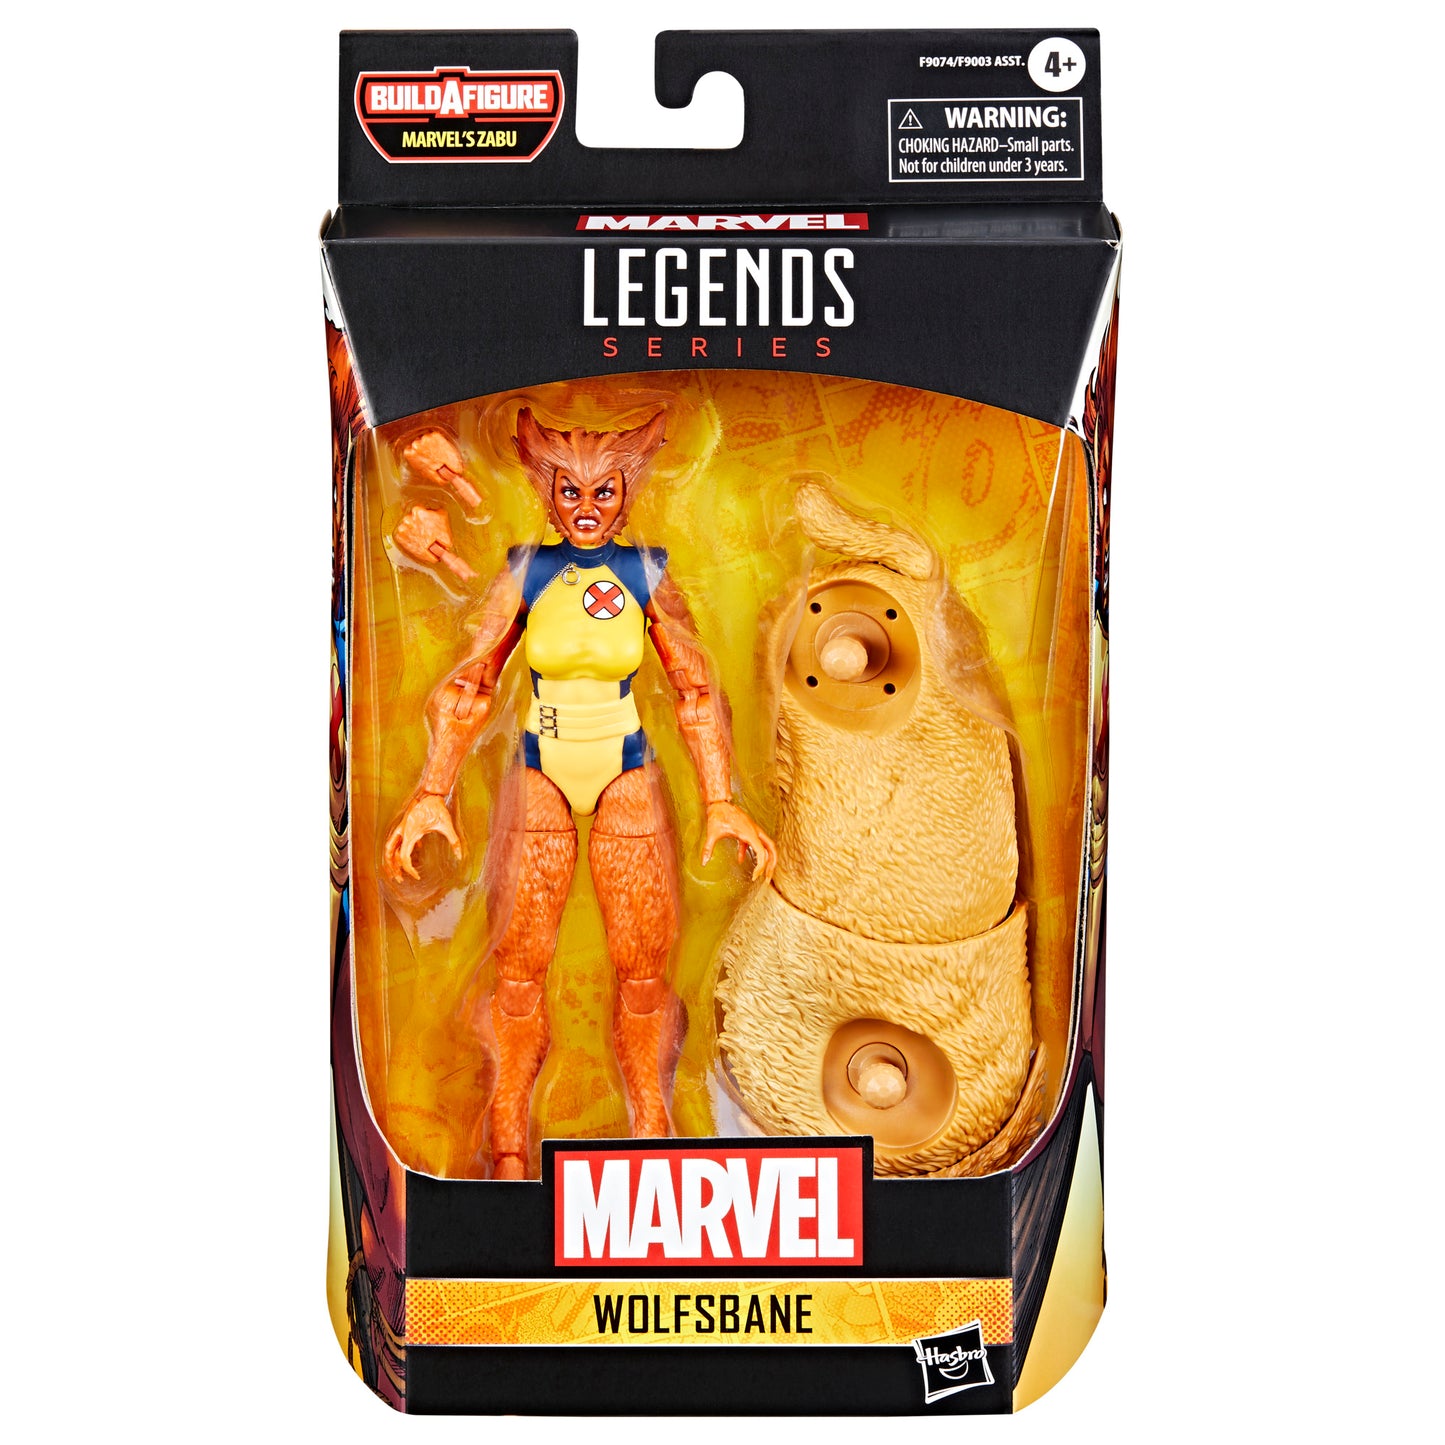 Marvel Legends Series Marvel Comics Wolfsbane Action Figure Toy